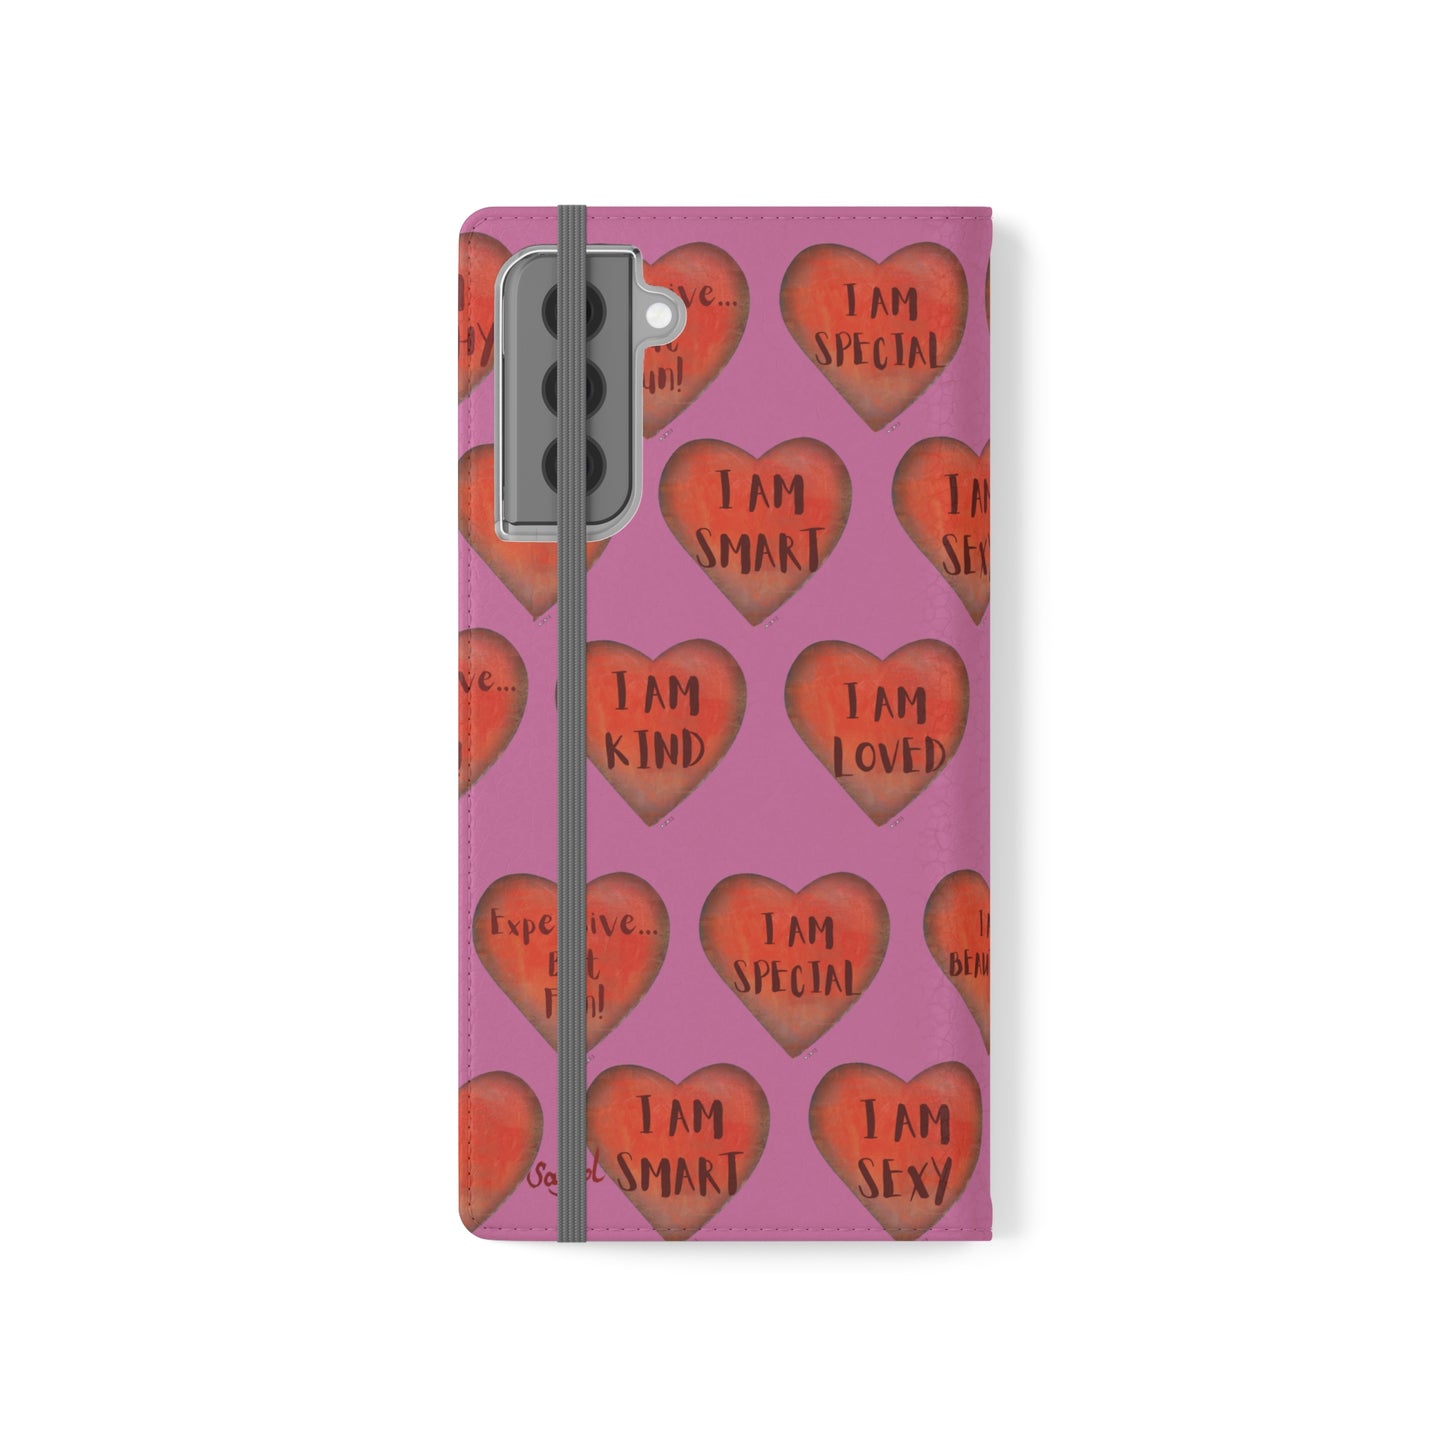 Phone Flip Cases - Wallet Phone case - flip phone case - Heart Phone case - Valentine Gift - iphone wallet - Samsung Wallet